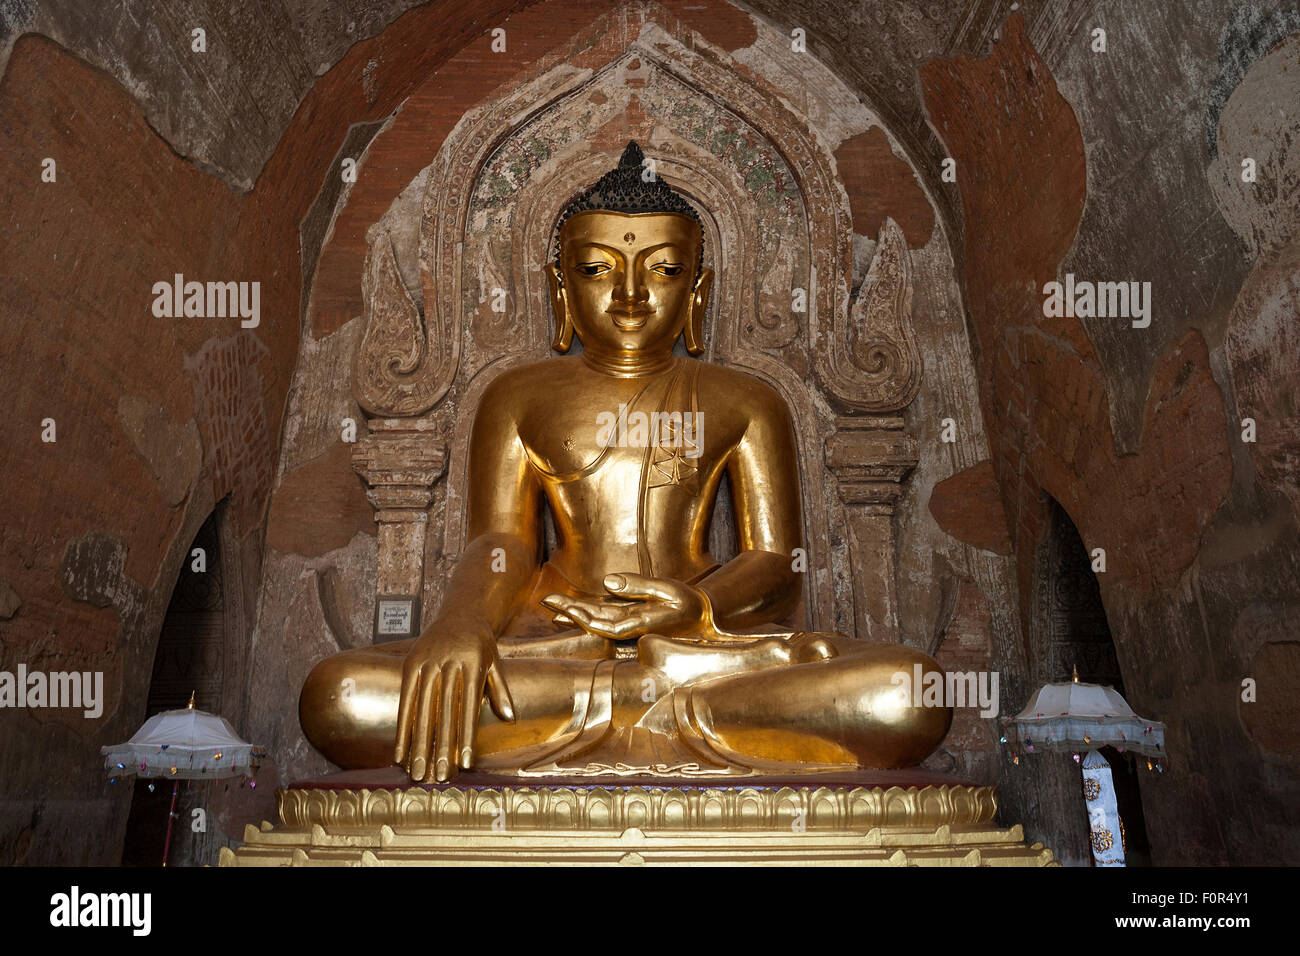 Seated gilded Buddha, Buddha statue, Ananda Temple, Bagan, Mandalay Division, Myanmar Stock Photo